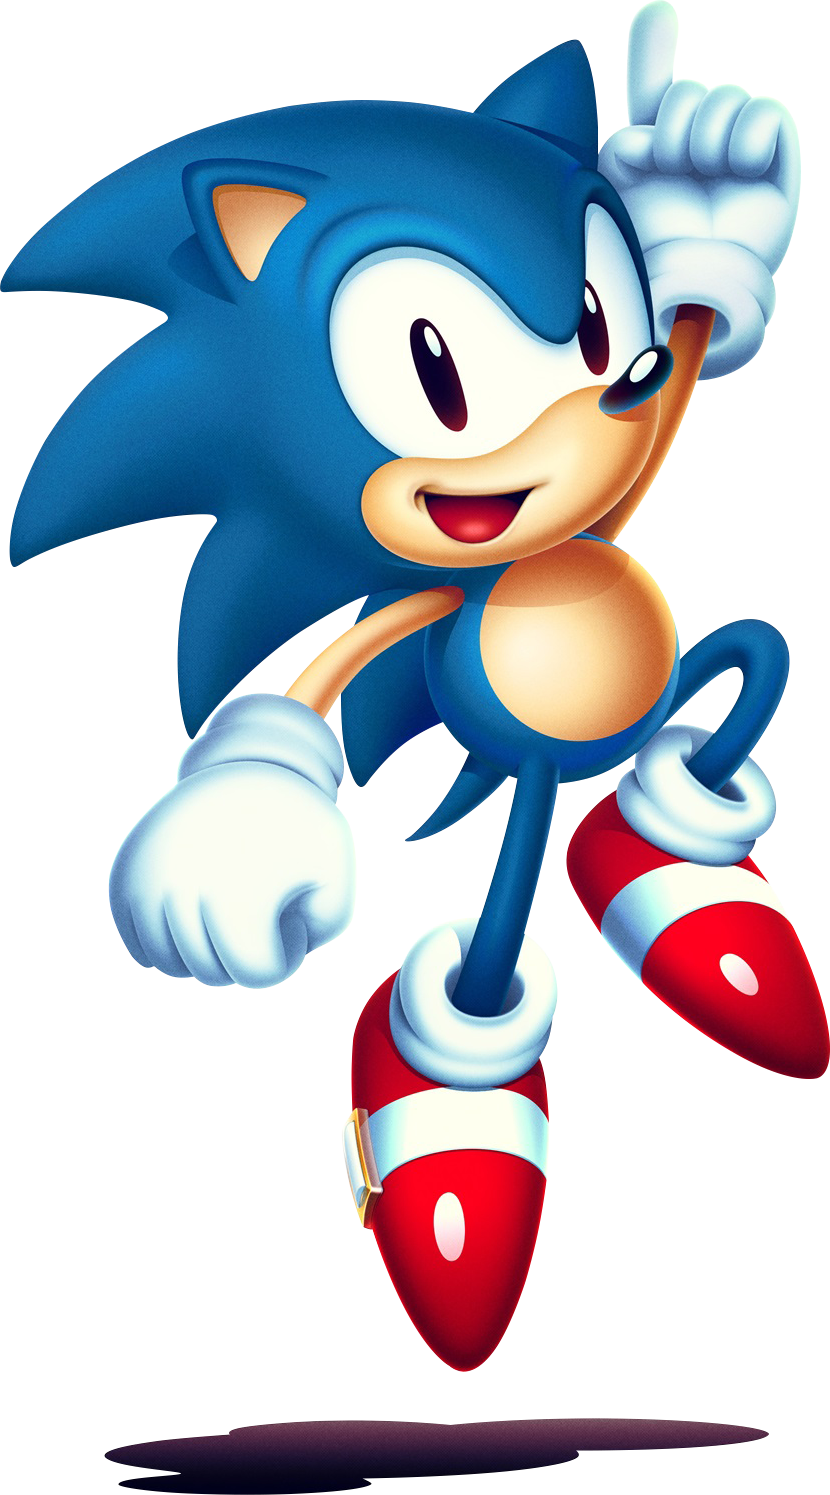 Sonic Mania 2, Fantendo - Game Ideas & More